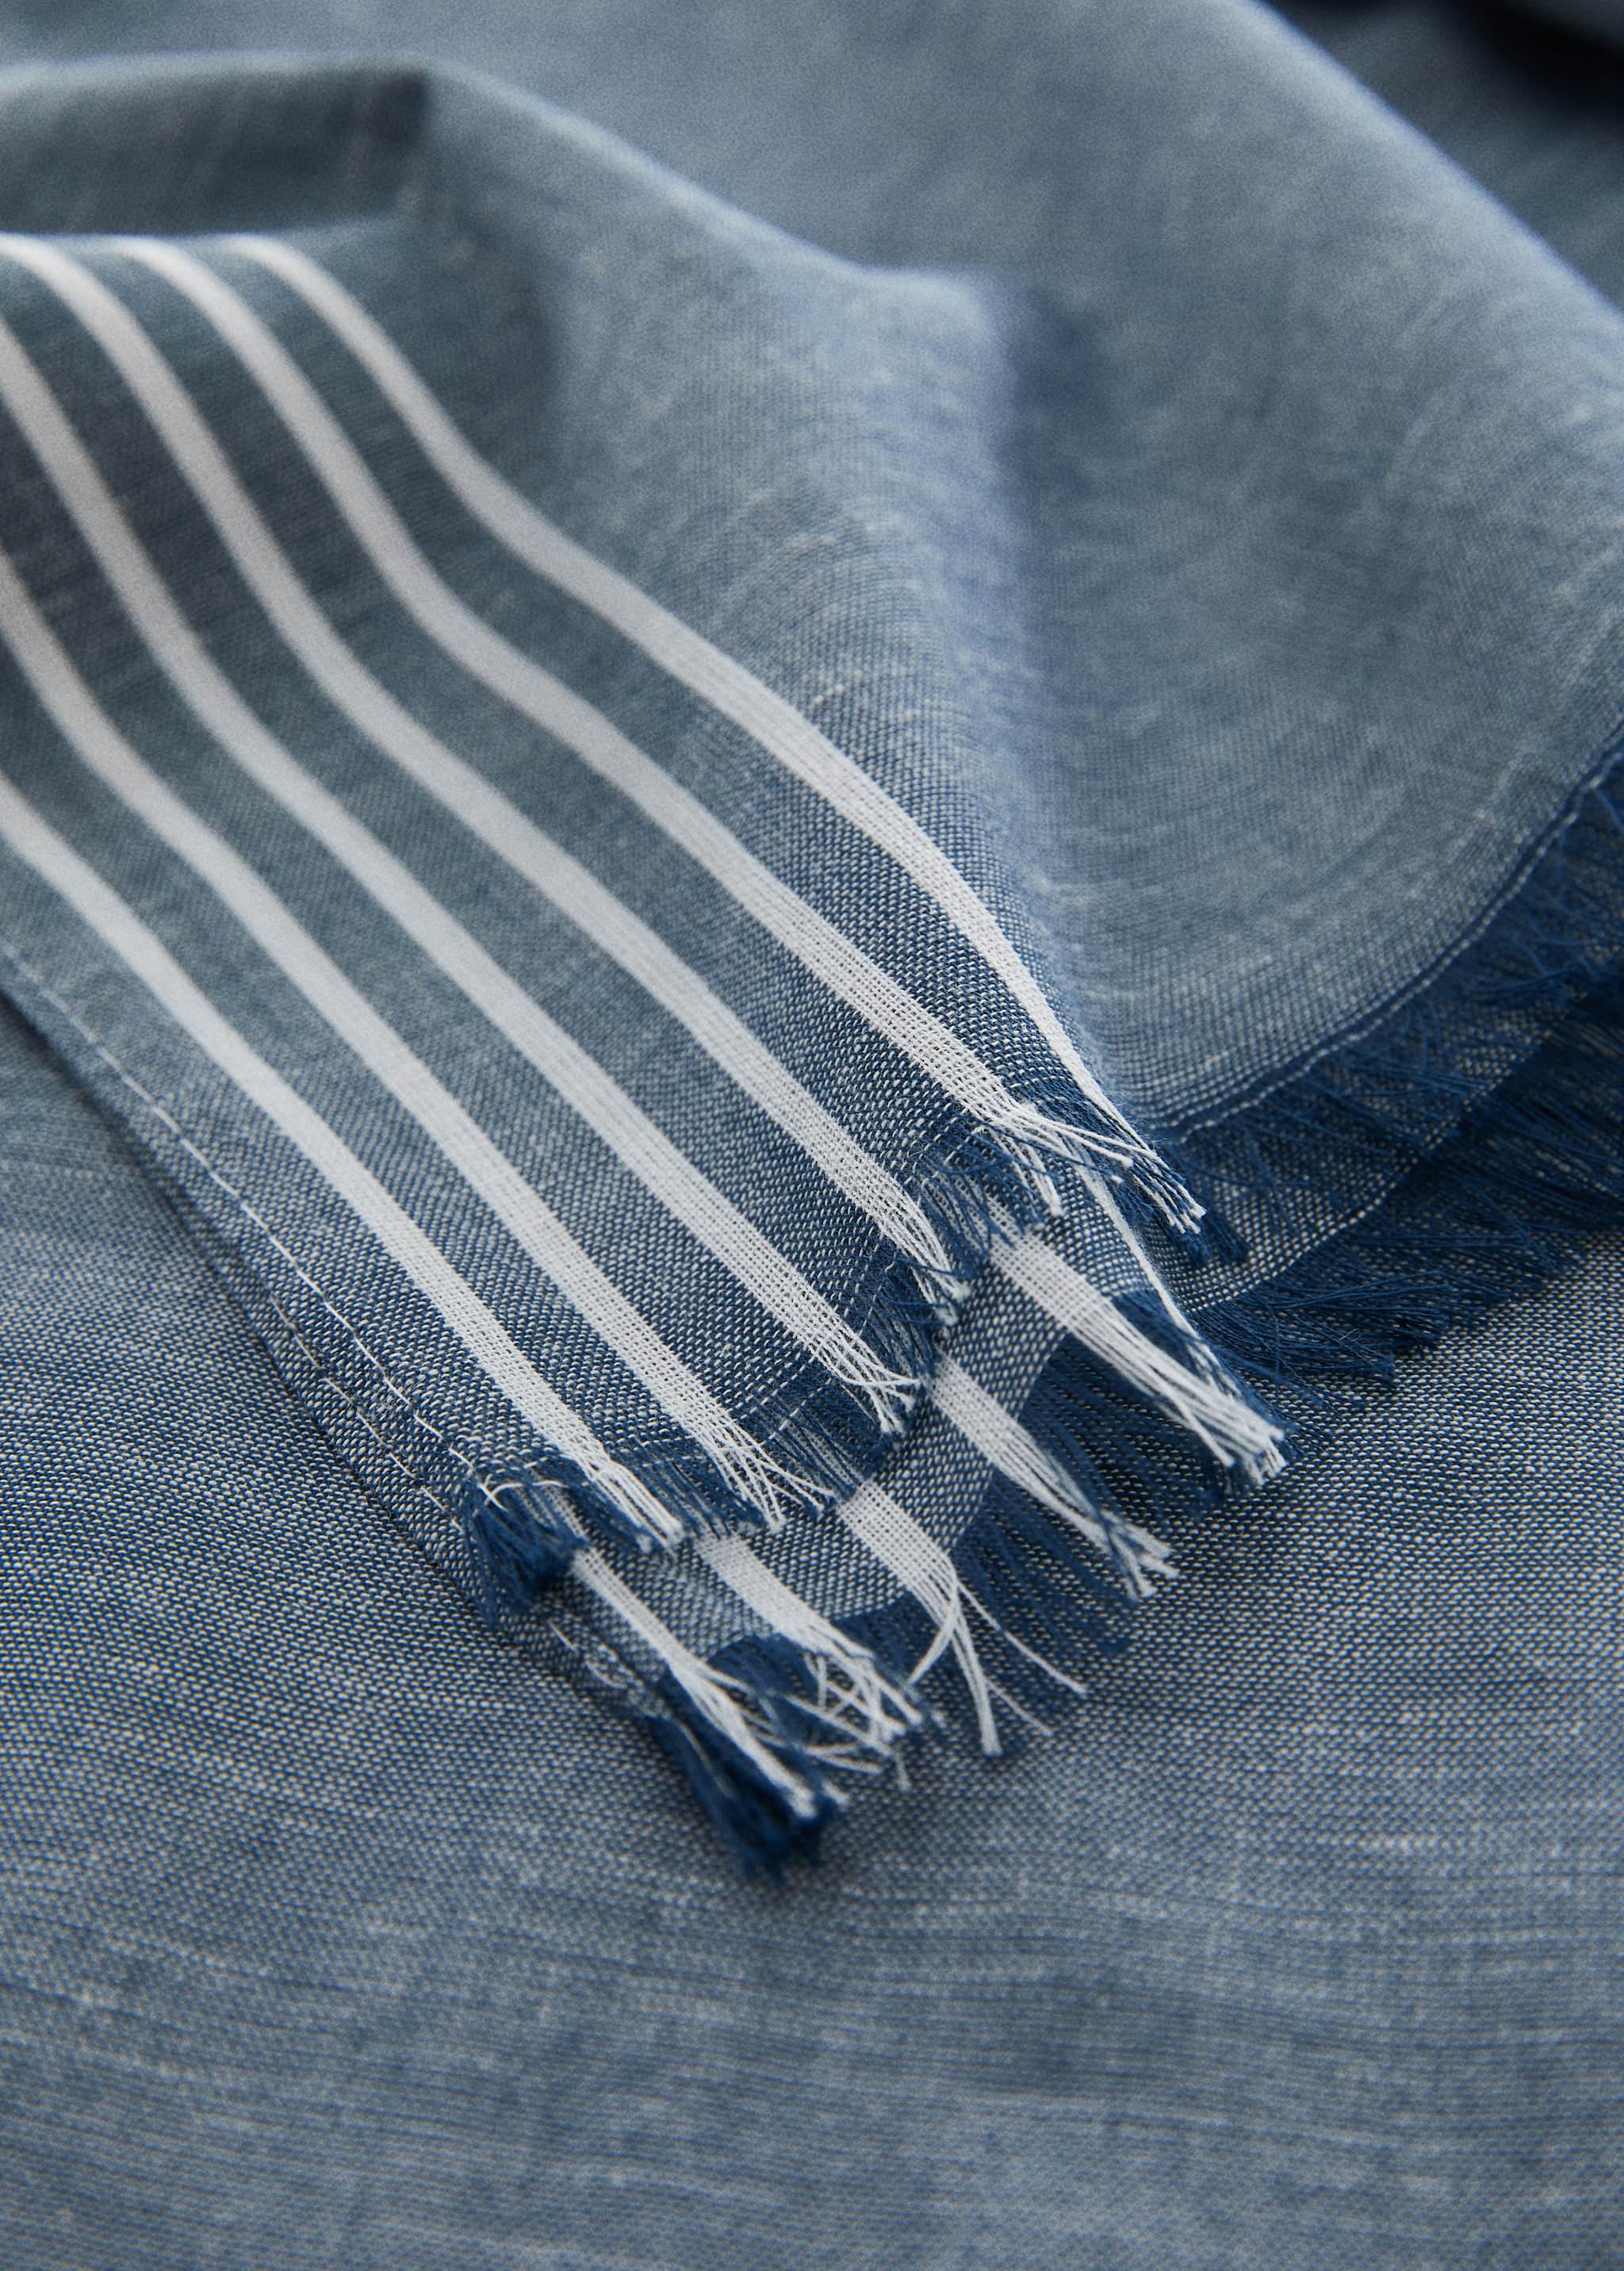 Striped linen cotton scarf - Medium plane